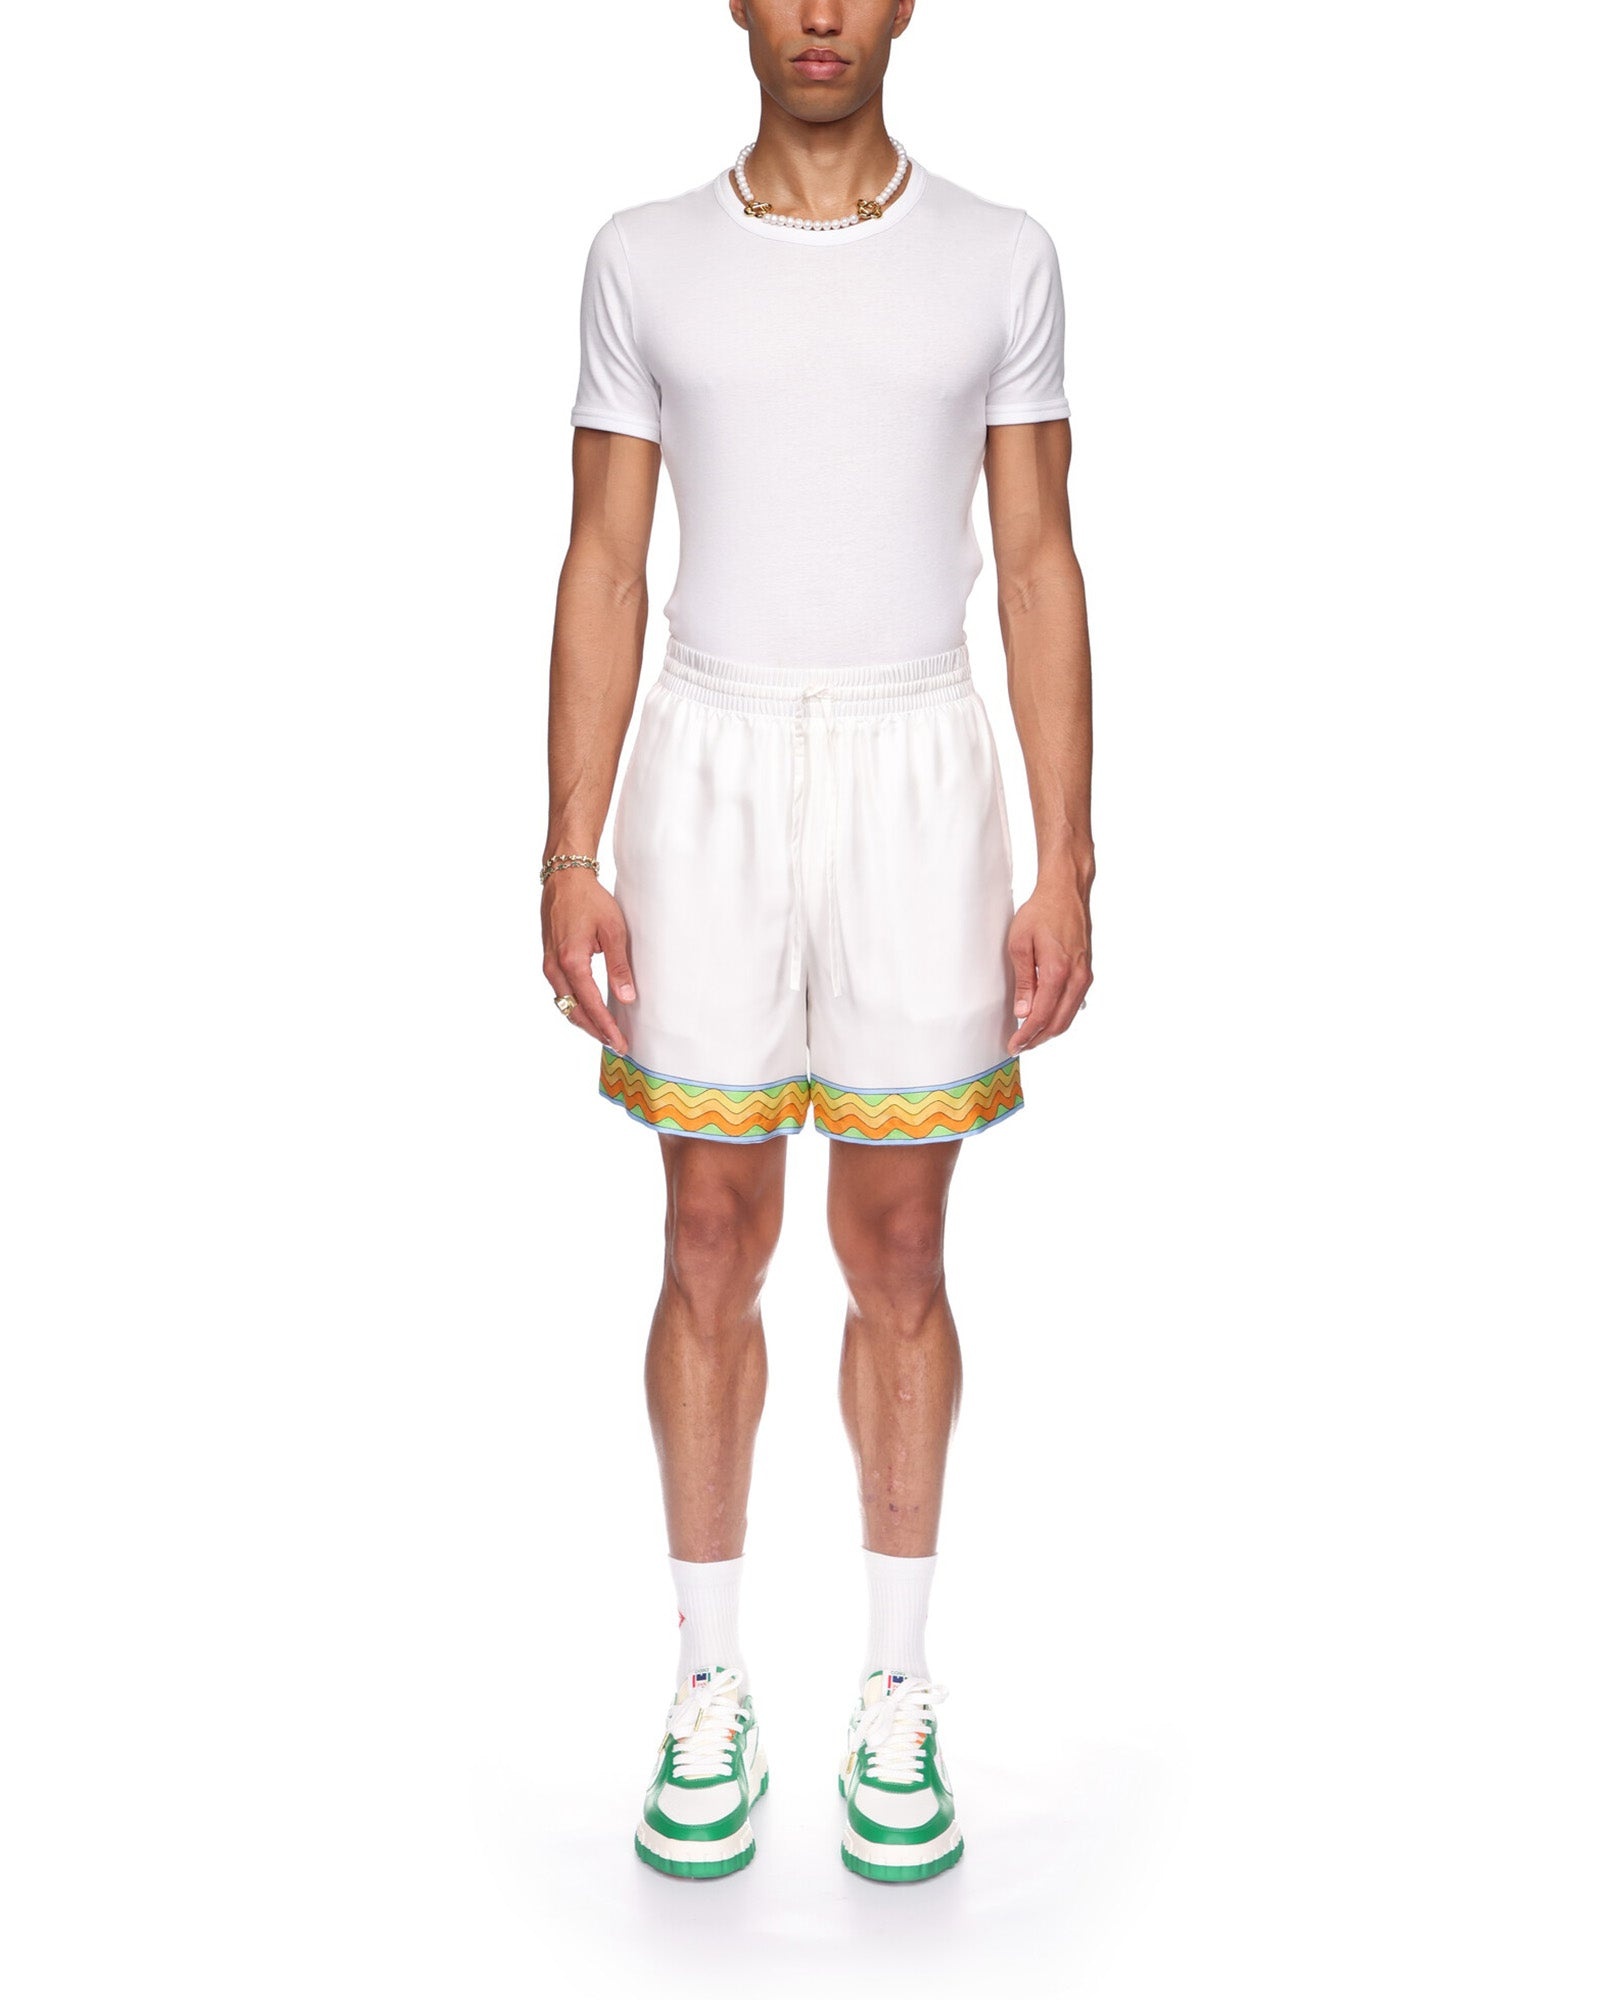 Afro Cubism Tennis Club Silk Shorts - 5